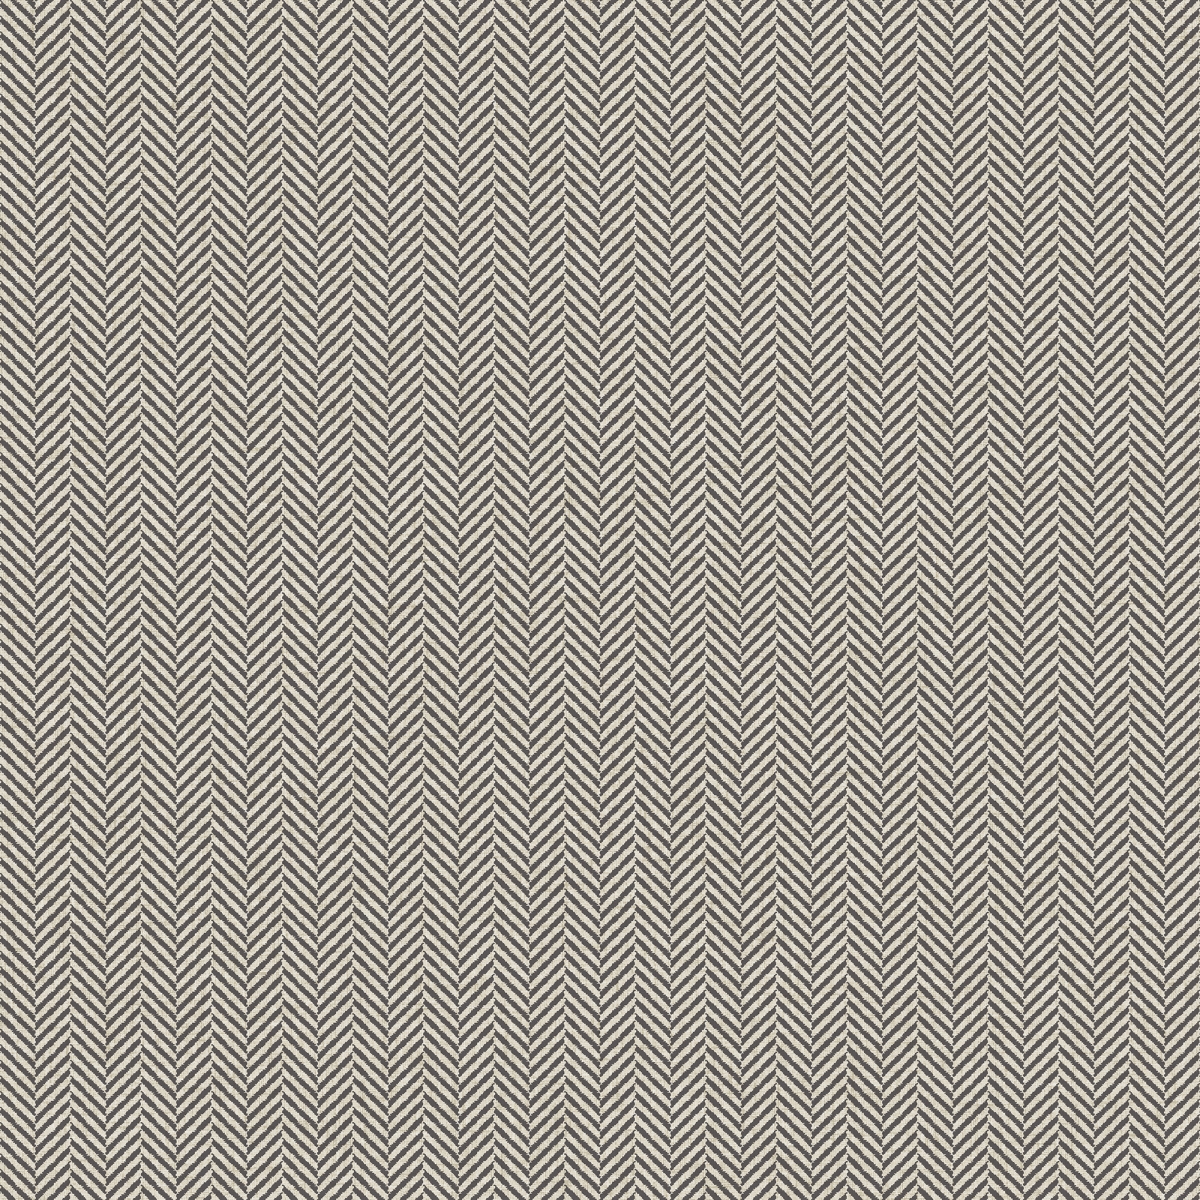 904204 Herringbone Non-woven Wallpaper, Charcoal